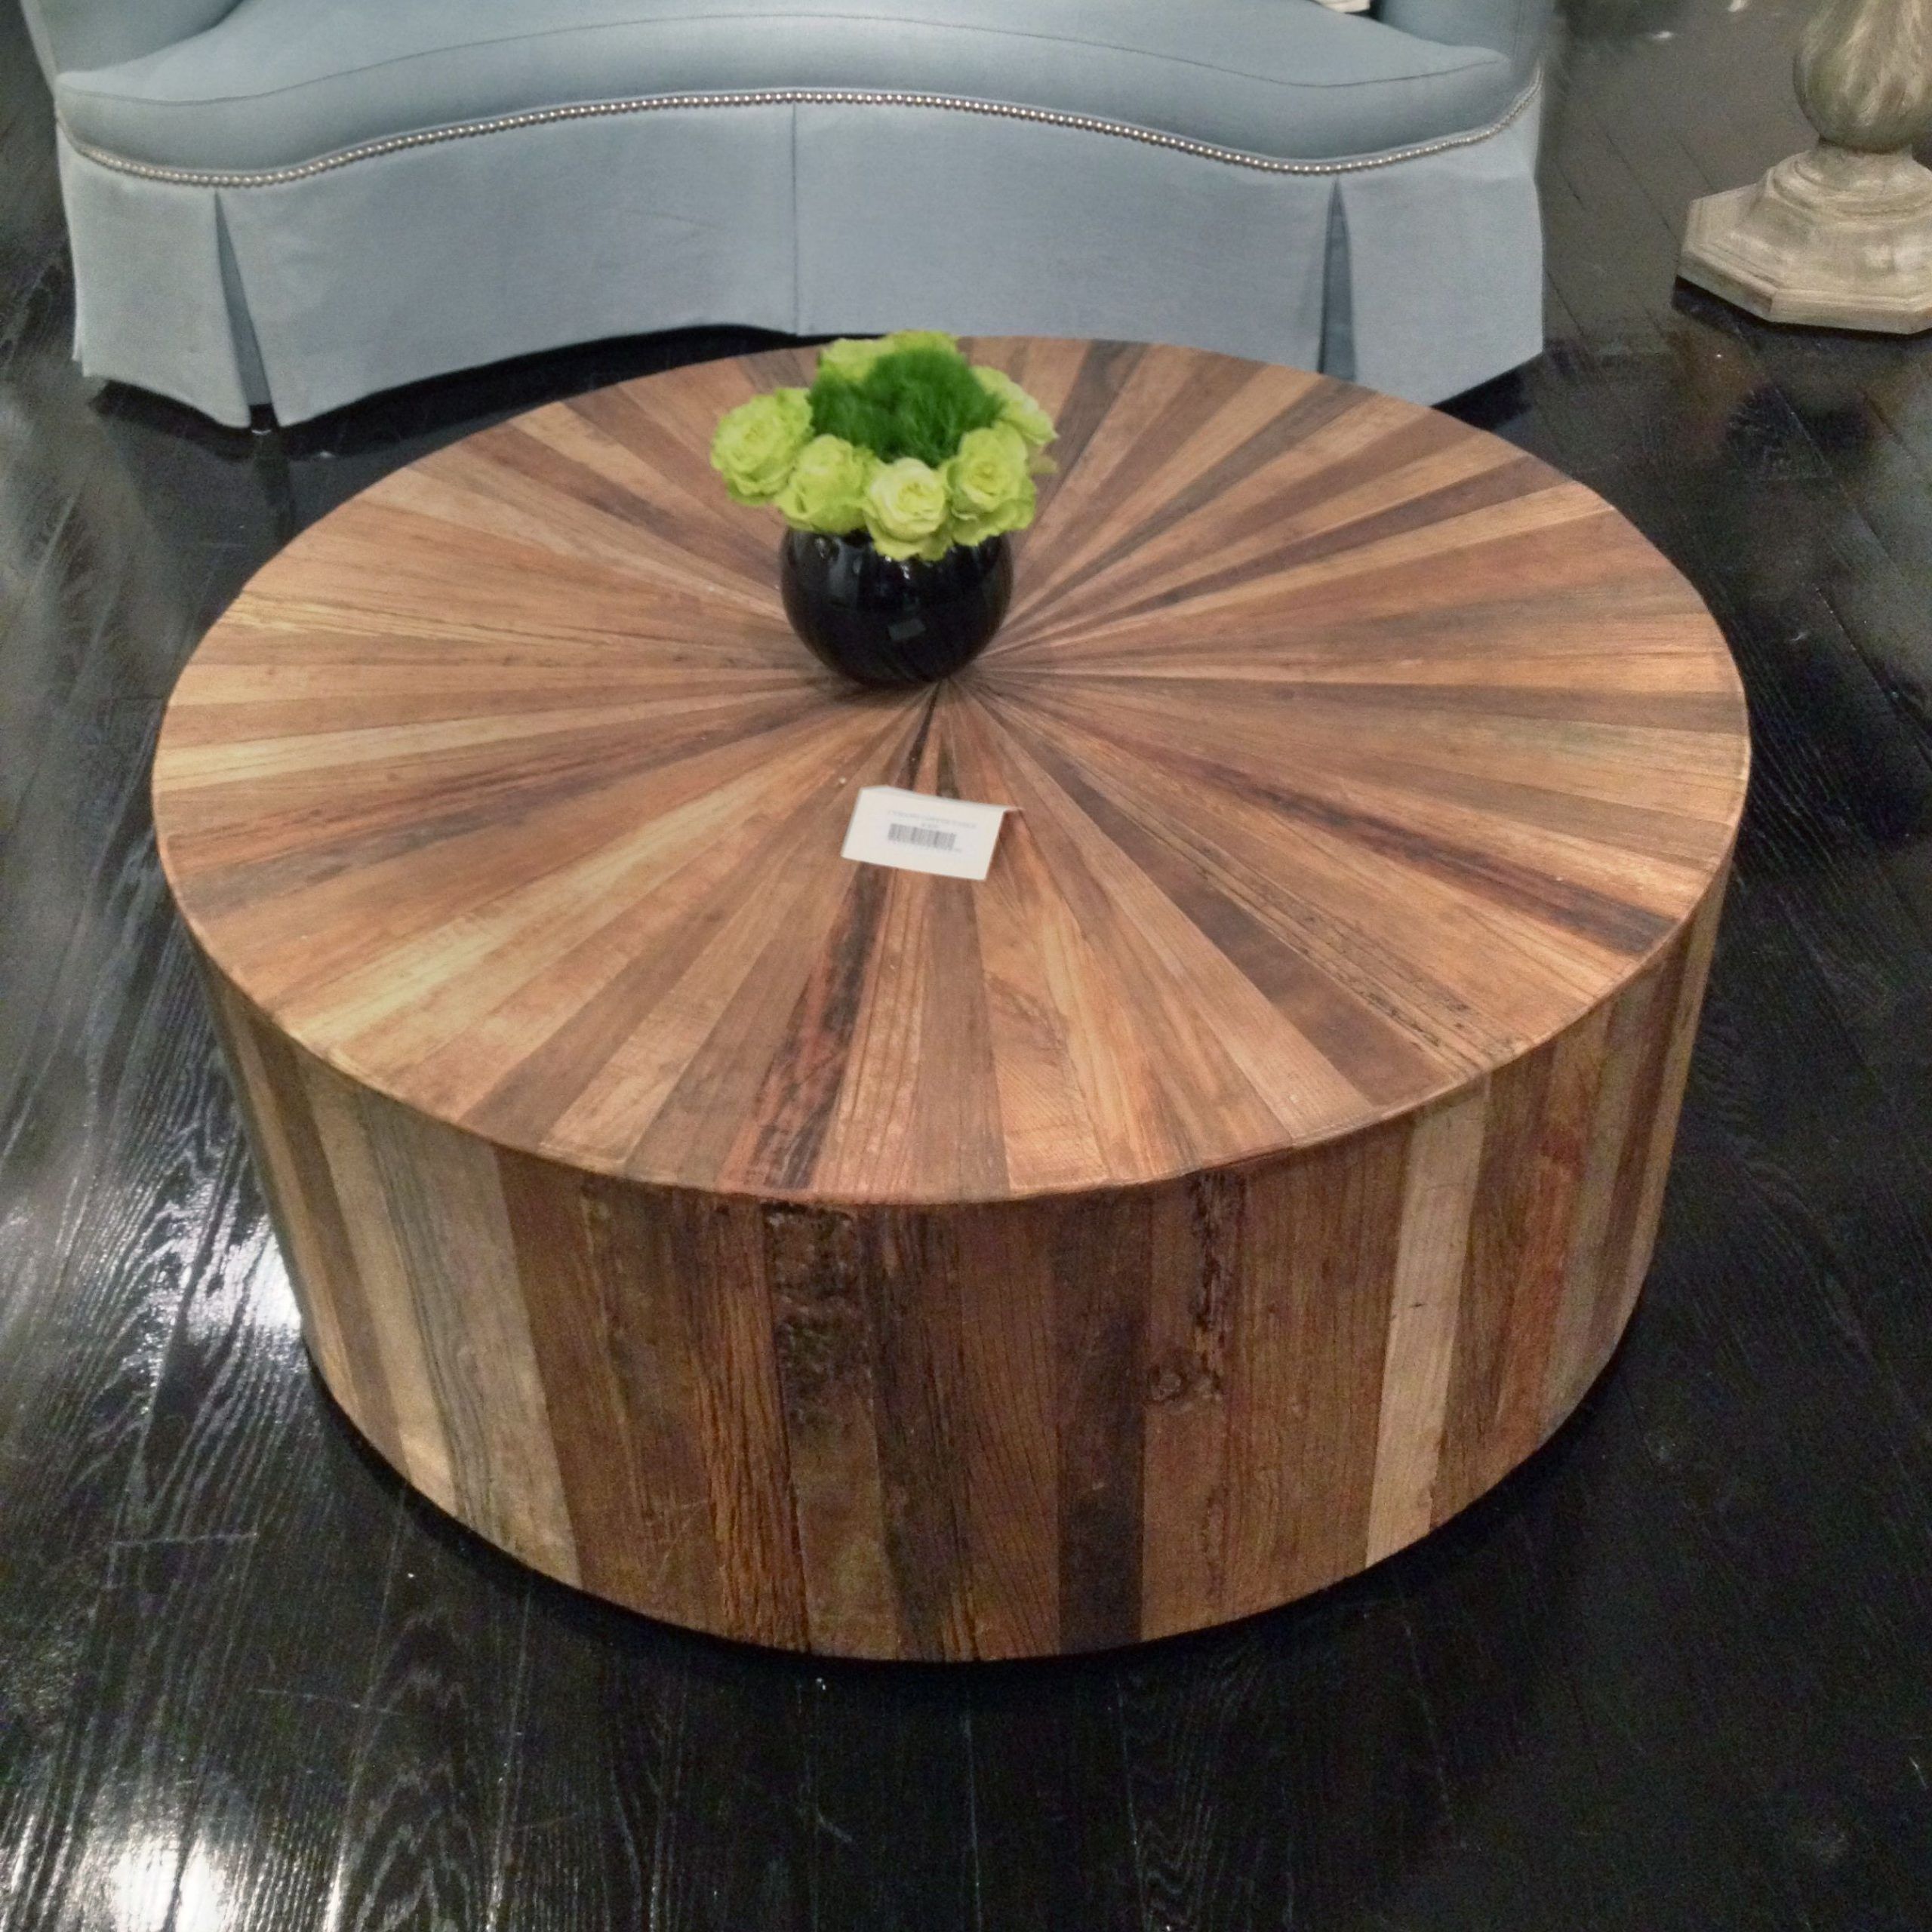 Round Wood Coffee Tables With Storage : Yj Round Storage Coffee Table With Round Coffee Tables With Storage (Gallery 11 of 20)